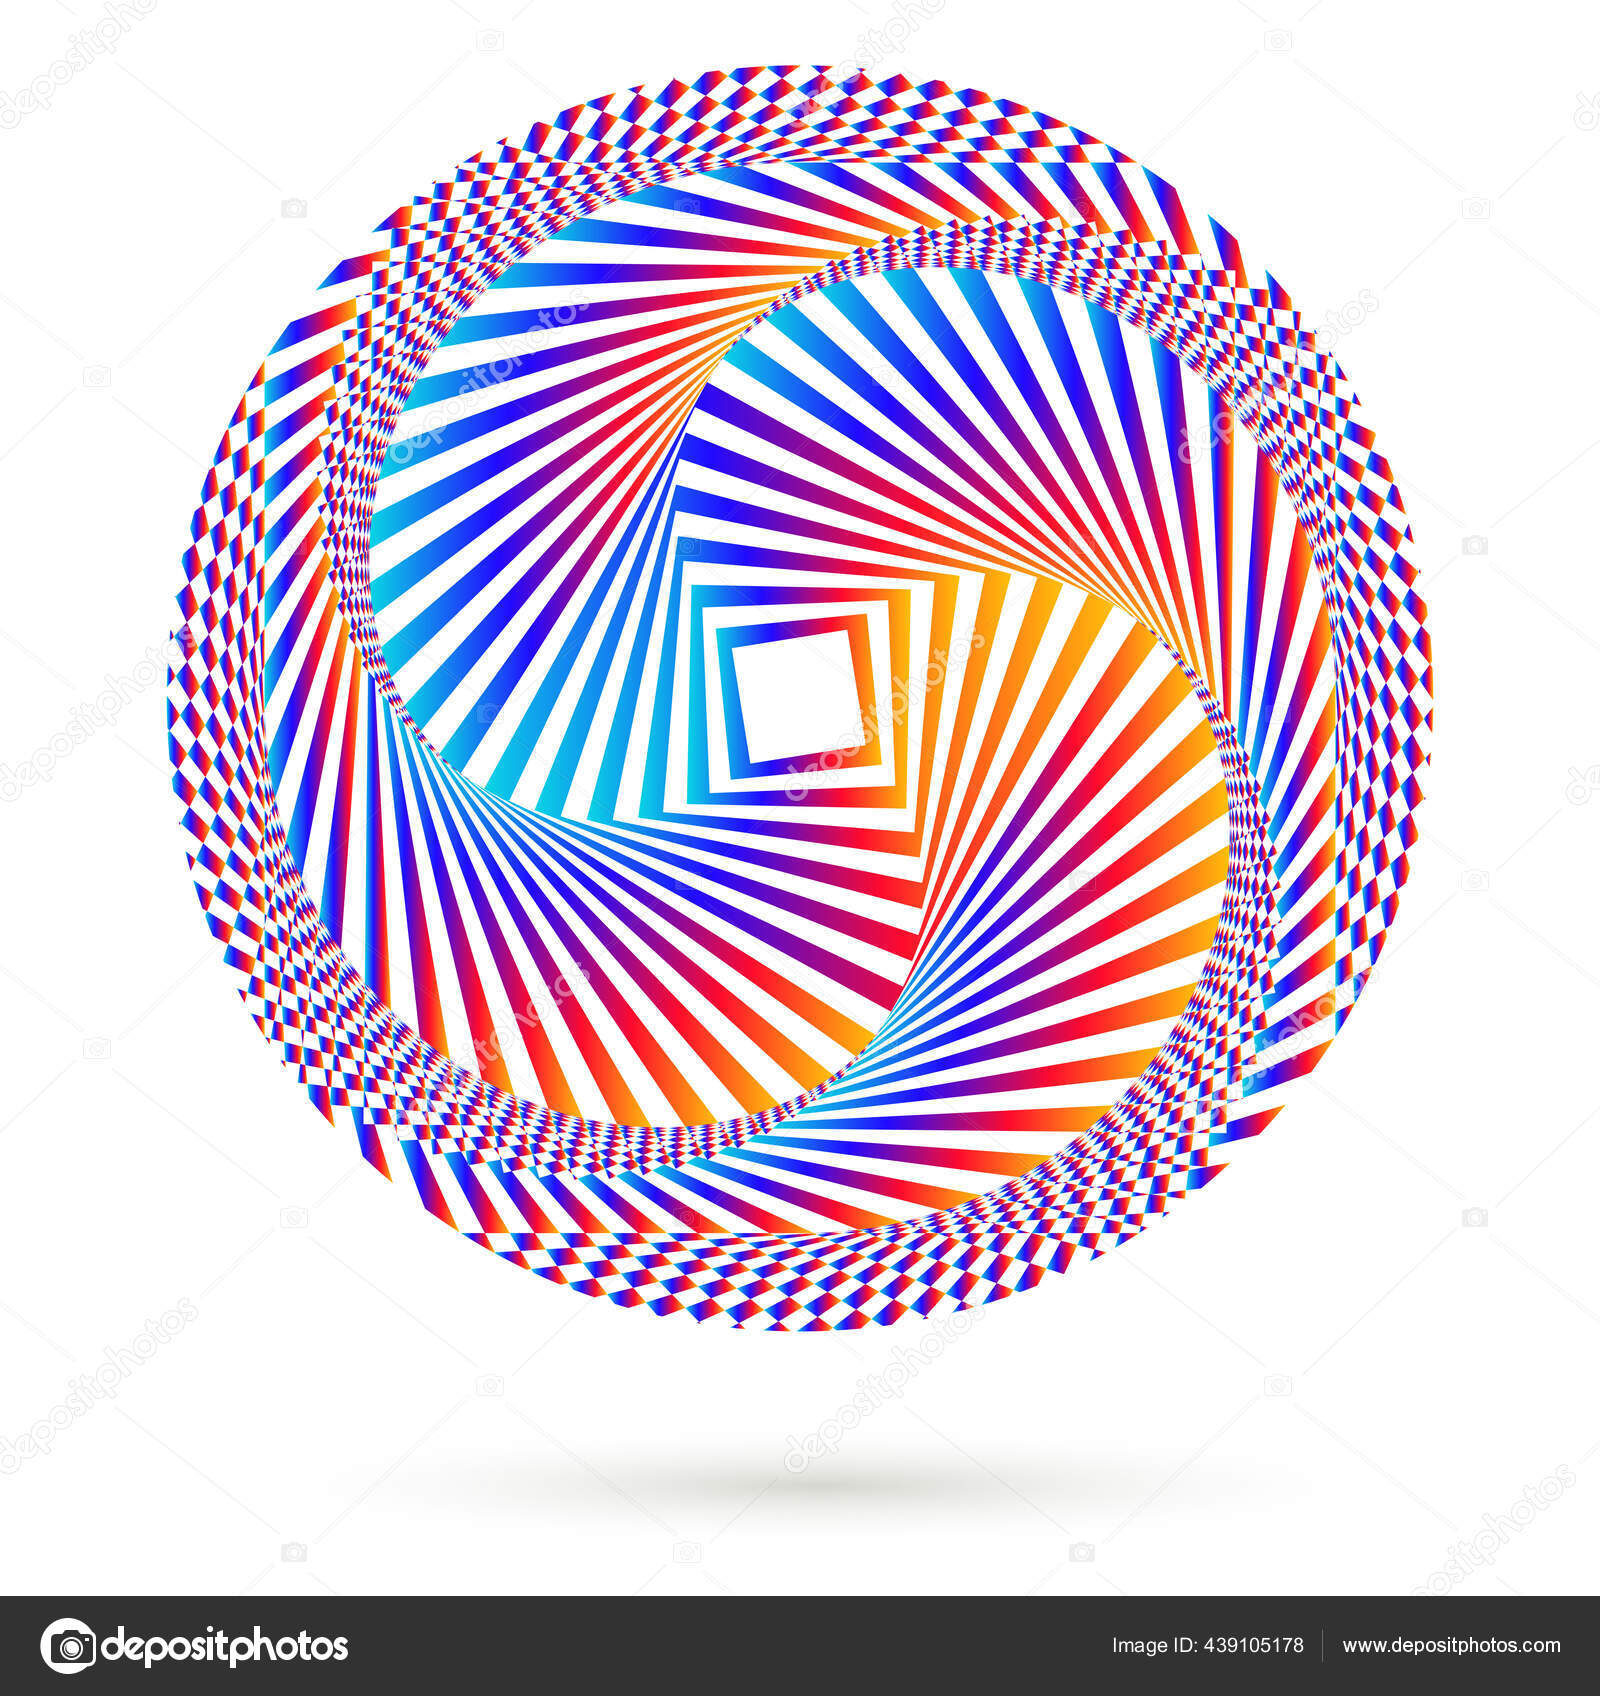 Cube Spiral Motion: Geometric Visual Impact